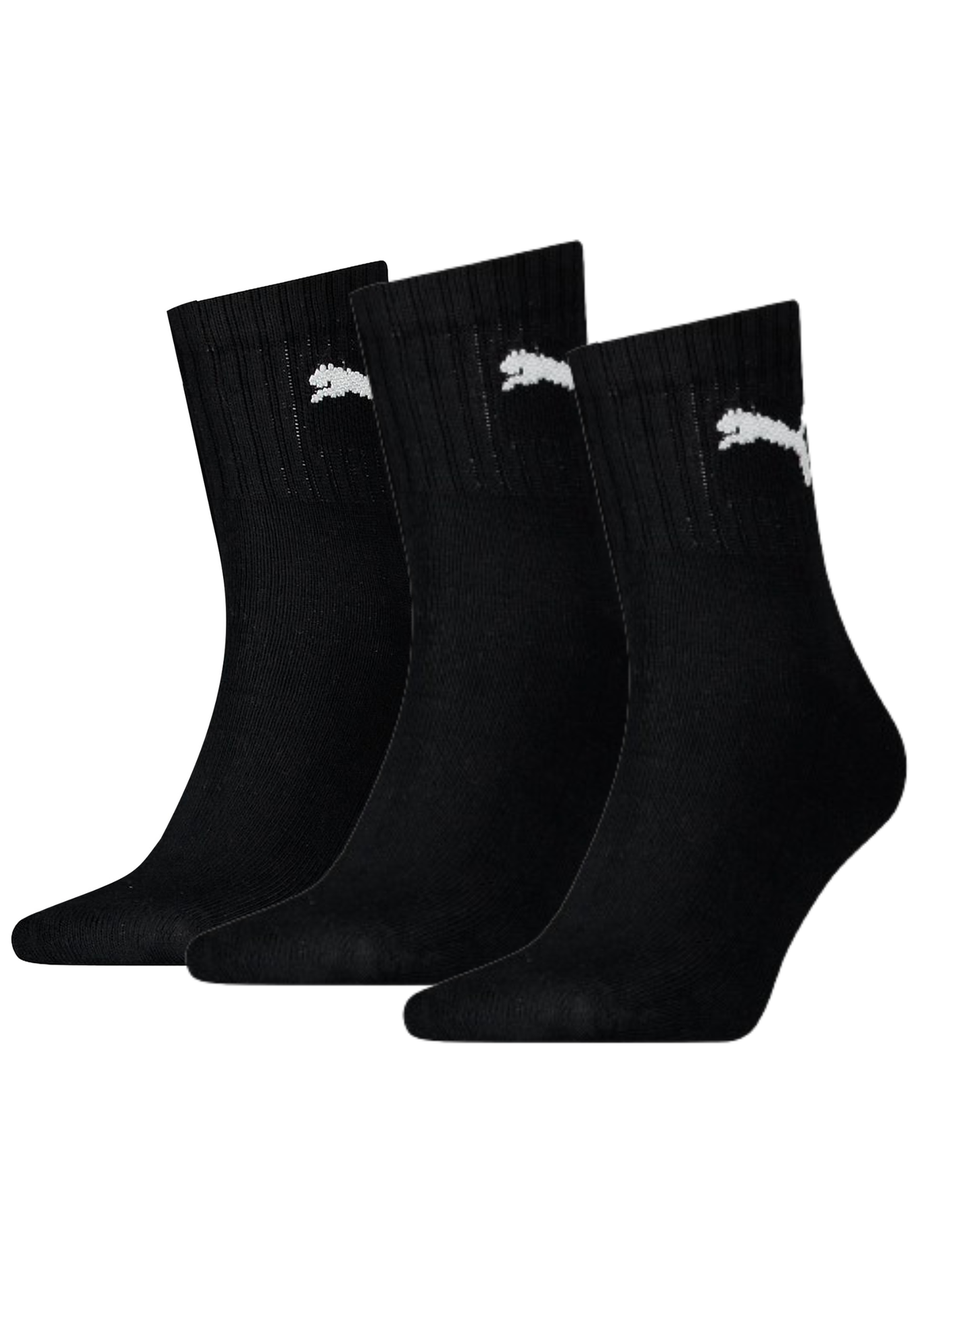 Puma Black Crew Socks (Pack of 3)